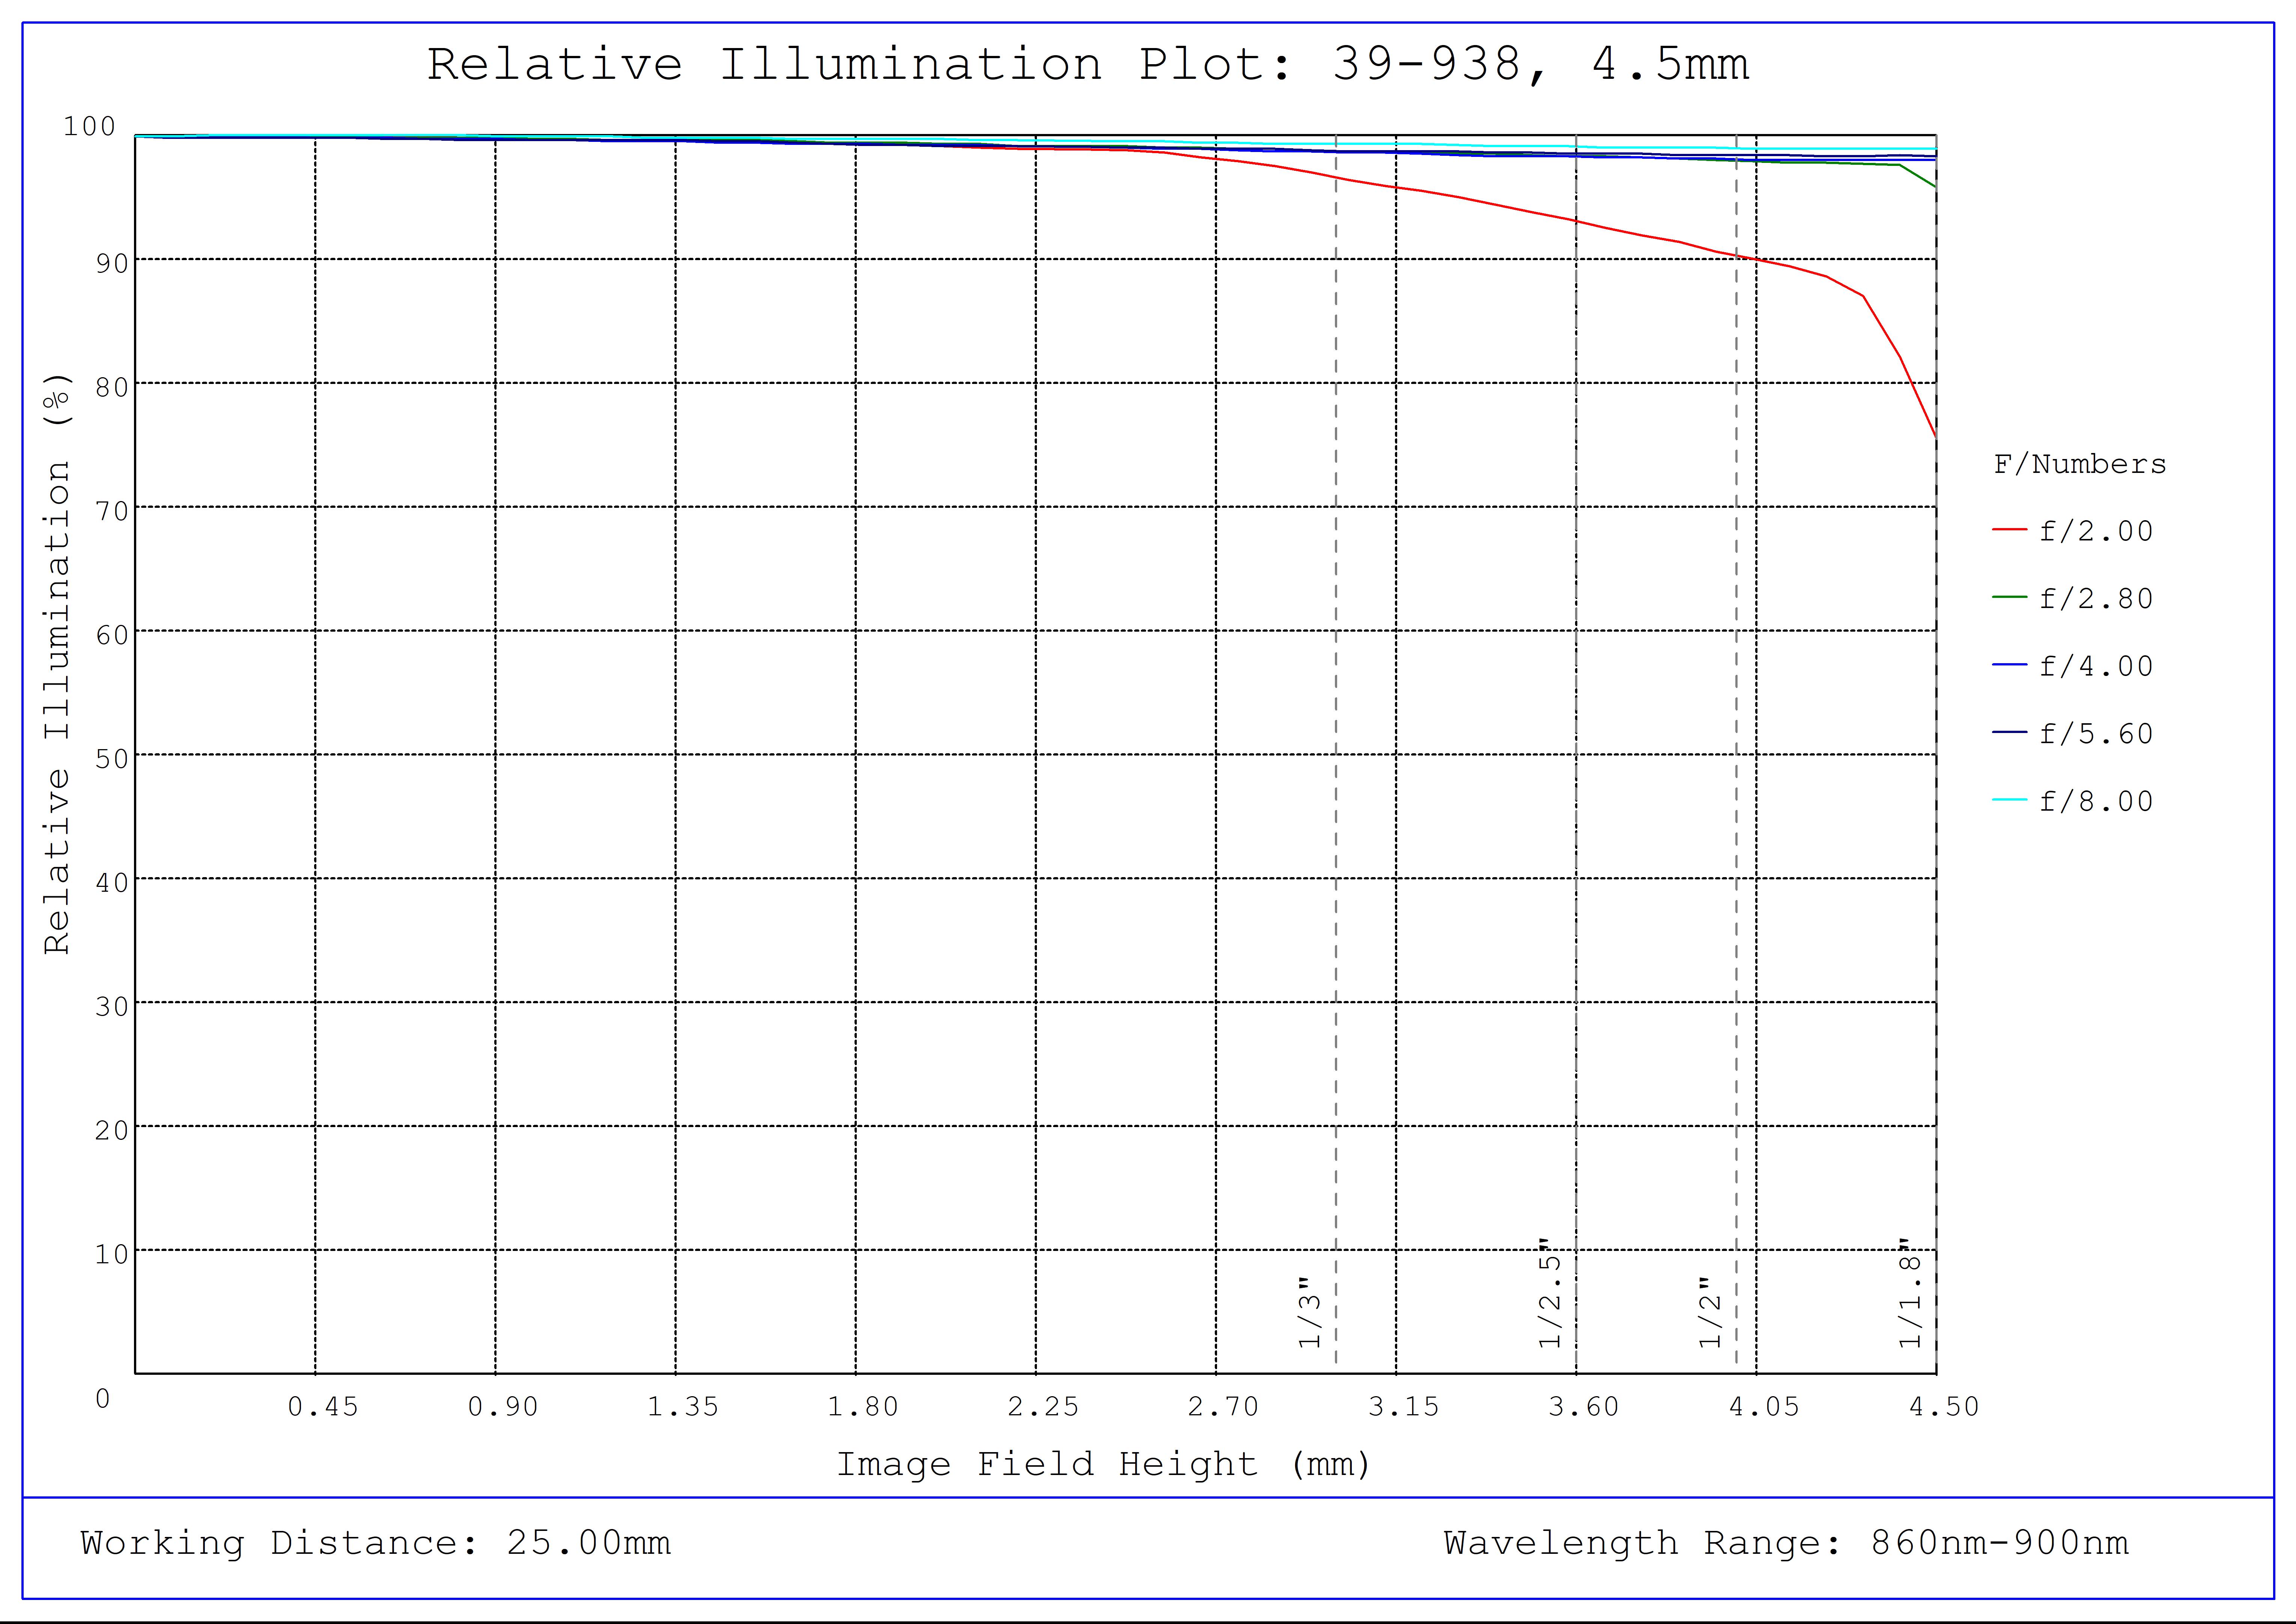 #39-938, 4.5mm C VIS-NIR Series Fixed Focal Length Lens, Relative Illumination Plot (NIR)